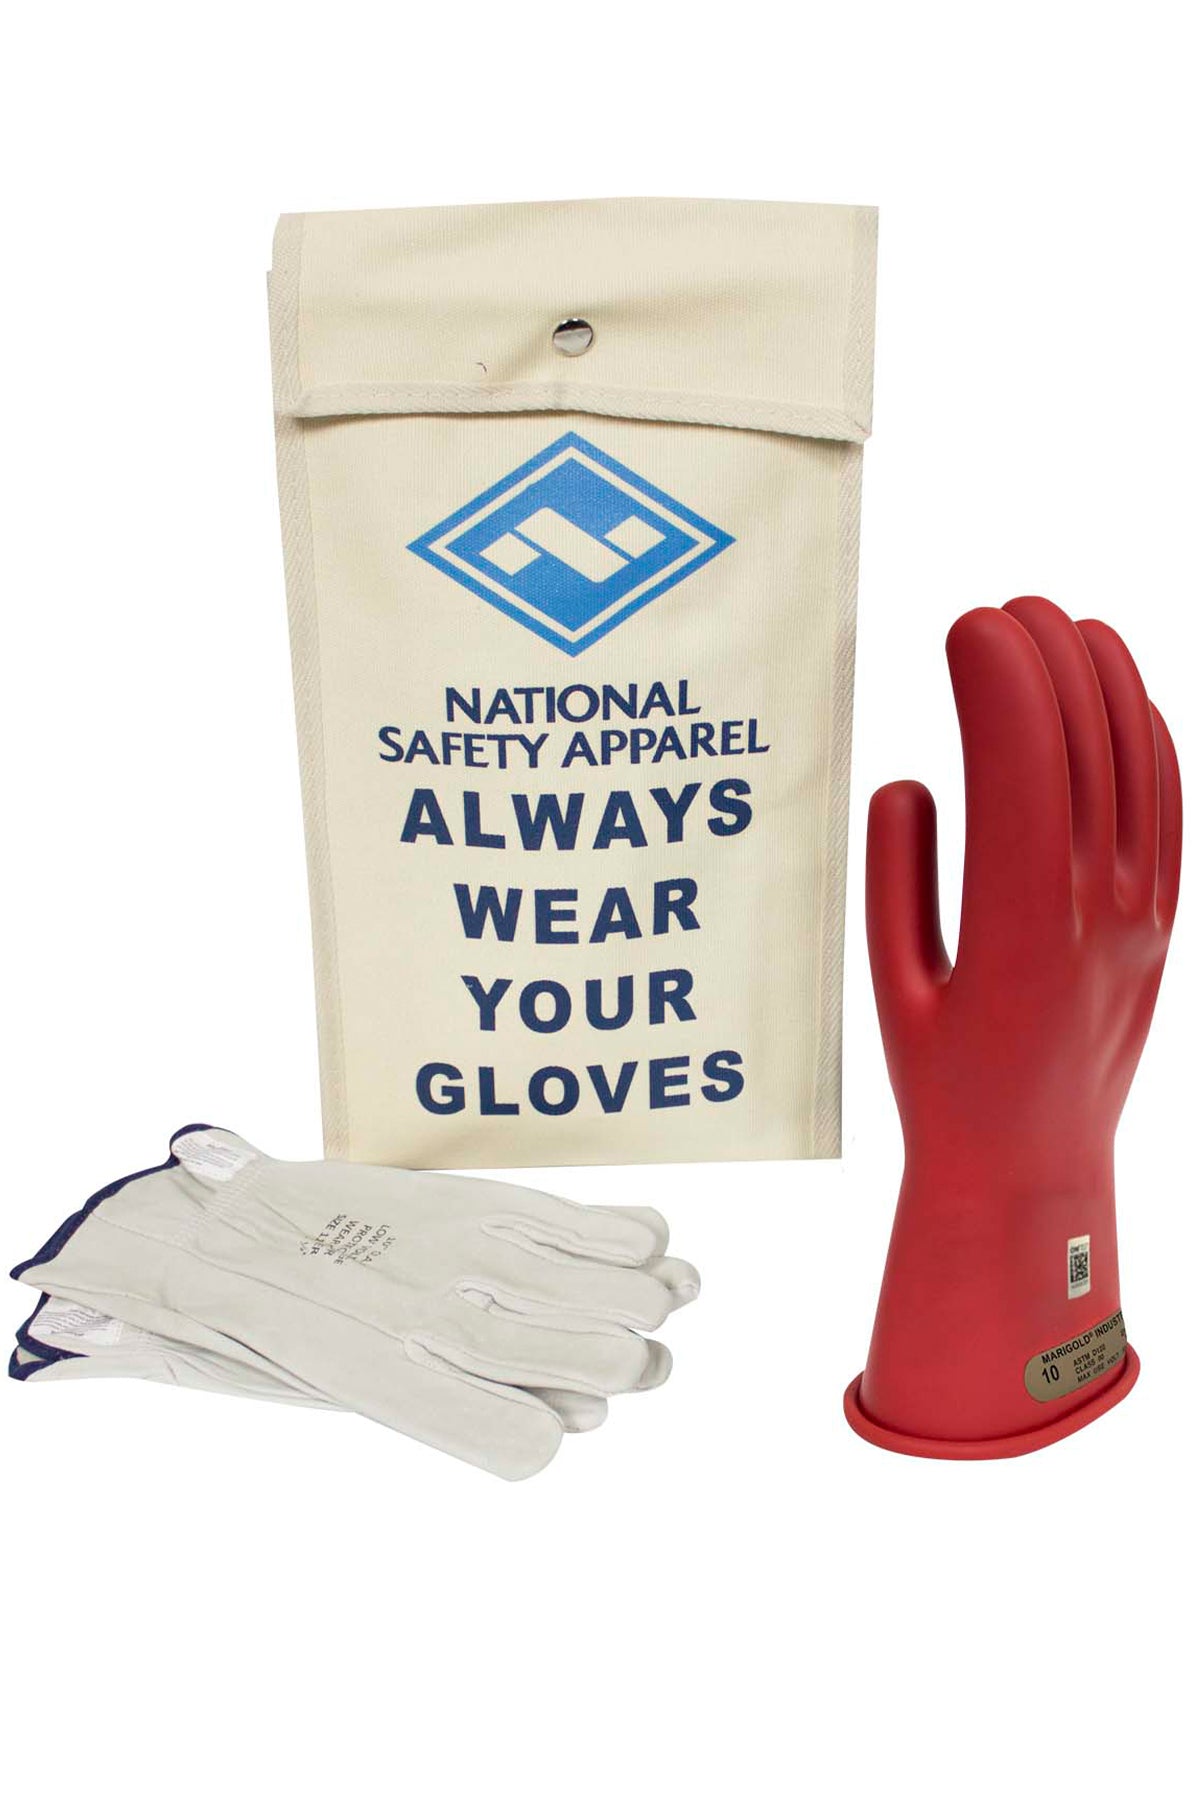 Class 00 ArcGuard Rubber Voltage Glove Kit